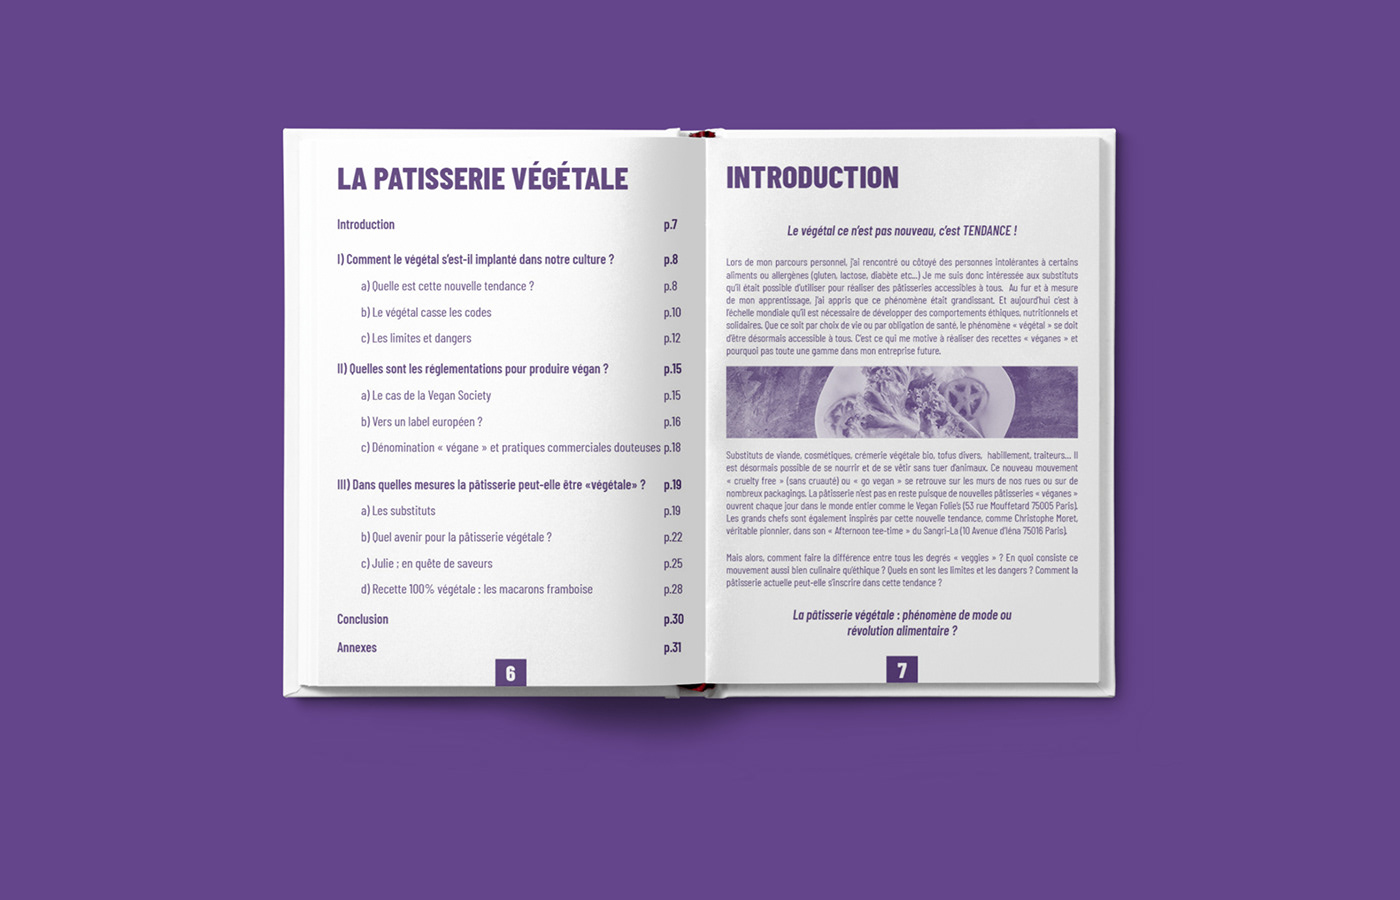 btm French InDesign monochrome pastry Patisserie purple vegan Veggie violet